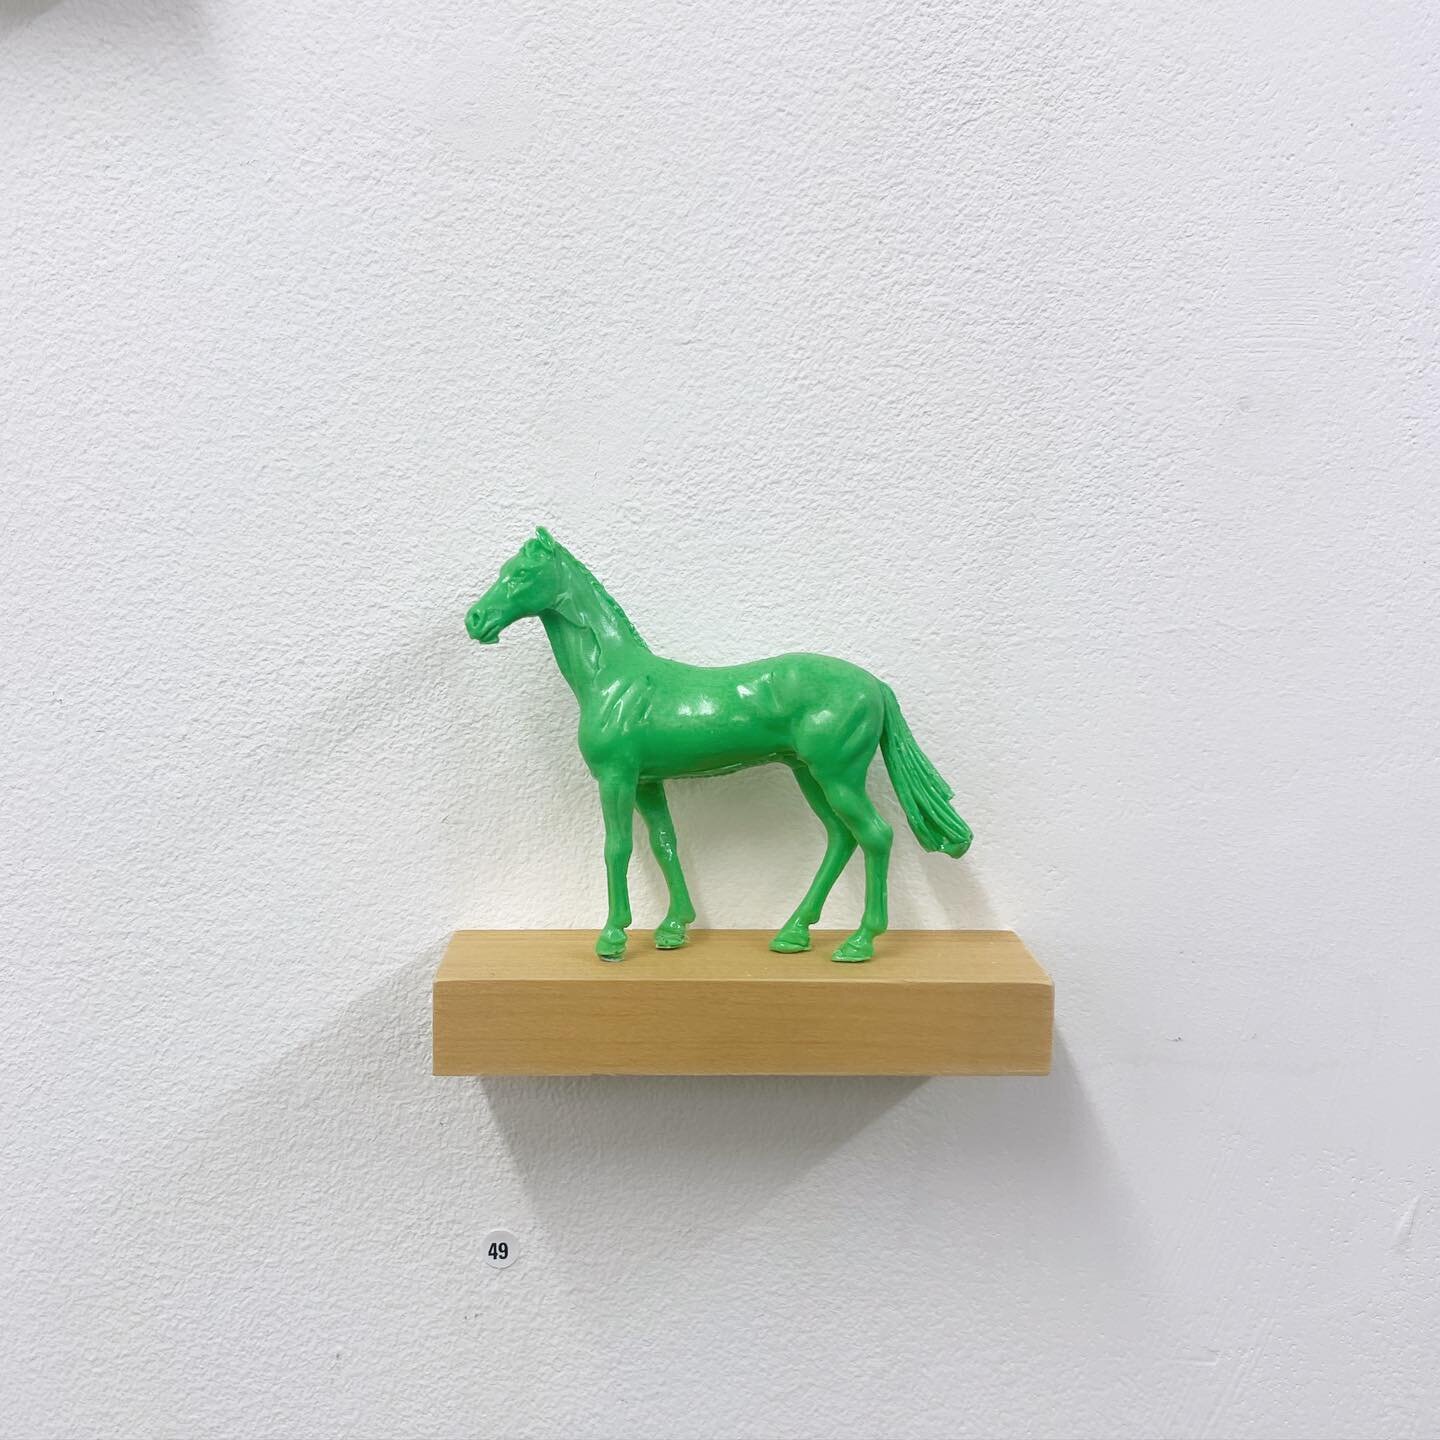 Saddle up 
On show at @arcadestudiosbelfast the best Royale Arcade show yet❣️thank you guys. 
Resin print 3d sculpture cast 

#green #horse #sculpture #installation #resin #cast #silicone #pink #visualart #art #artist #emergingartist #soloshow #exhib